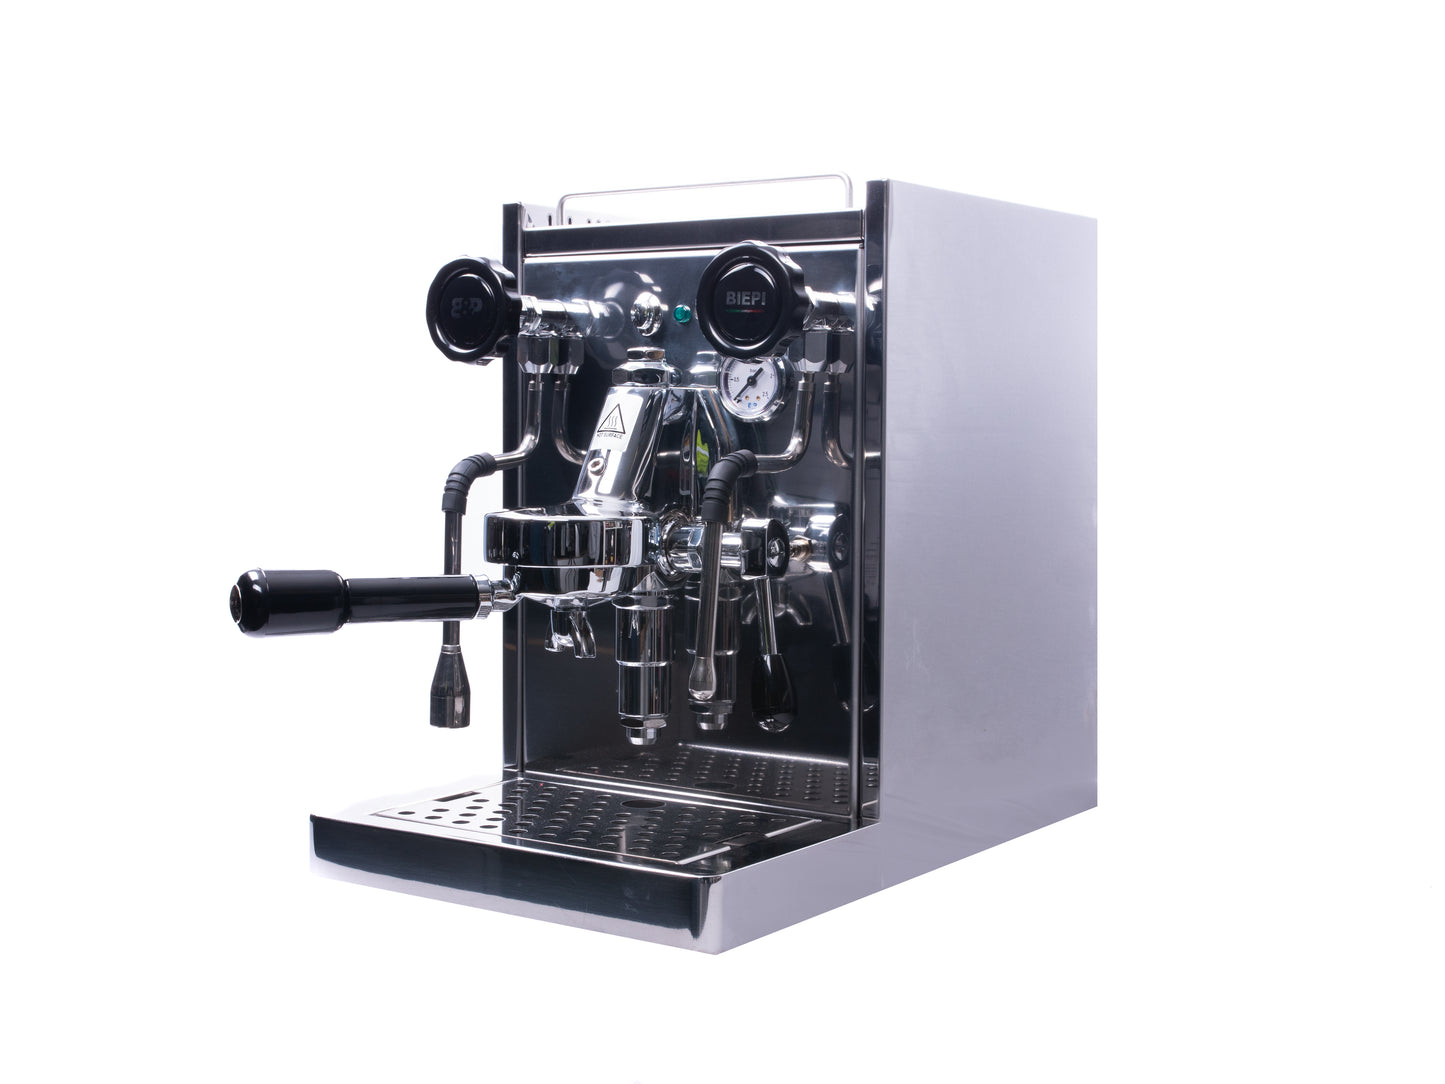 Biepi Sara coffee machine